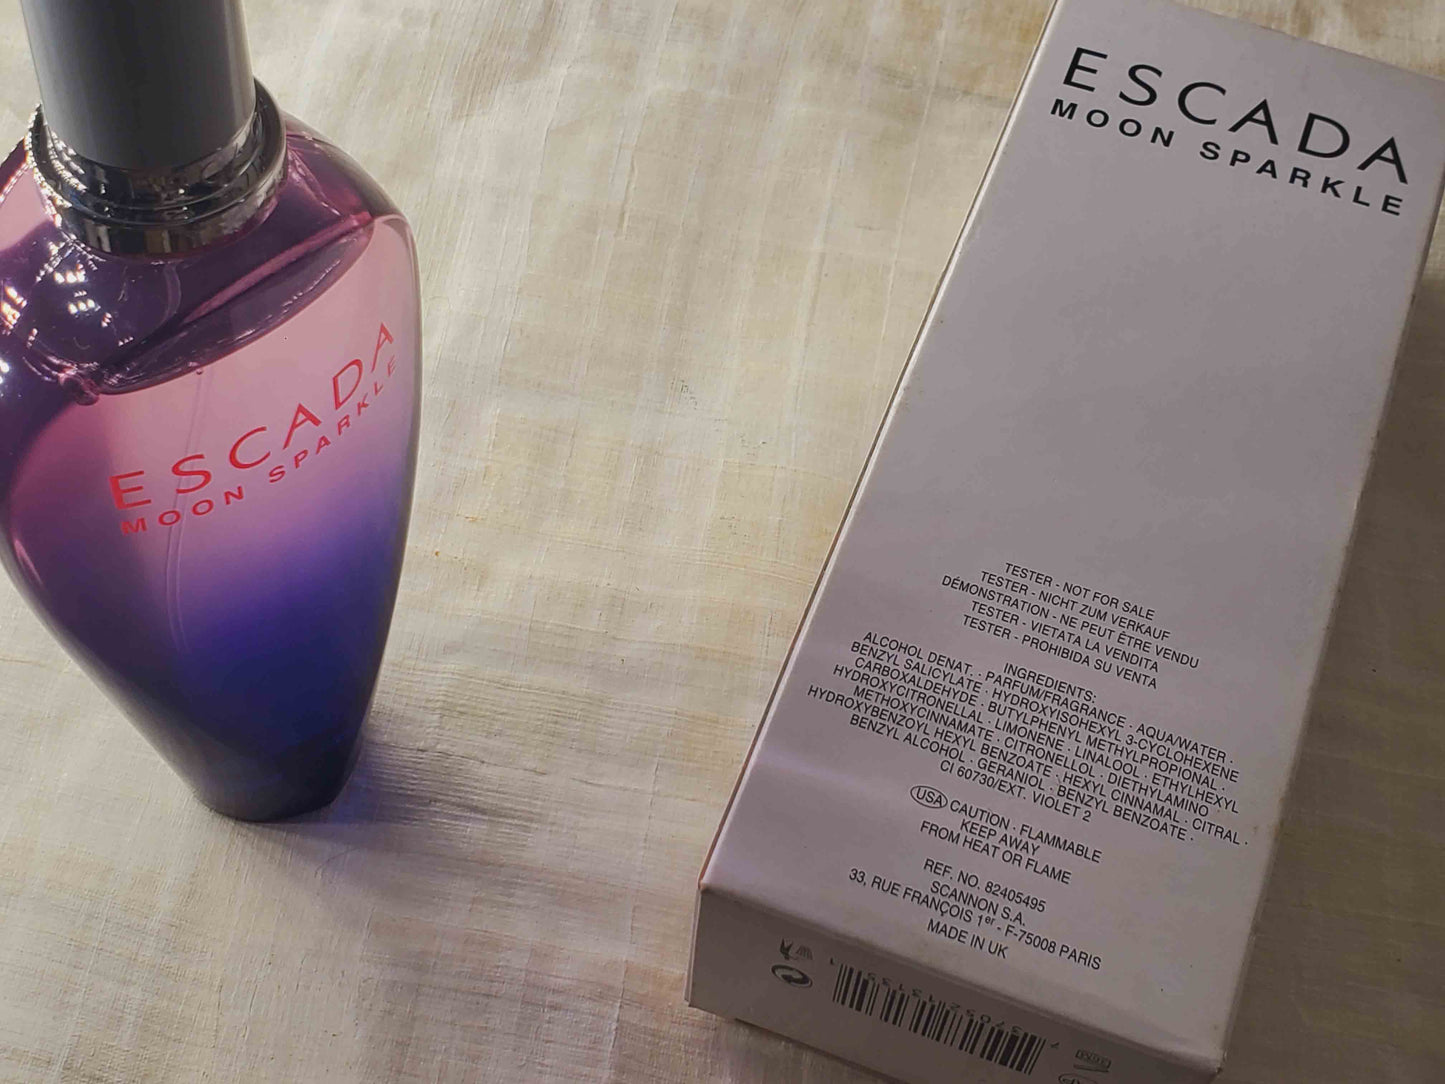 Escada Moon Sparkle for women EDT Spray 100 ml 3.4 oz , Vintage, Rare, TESTER